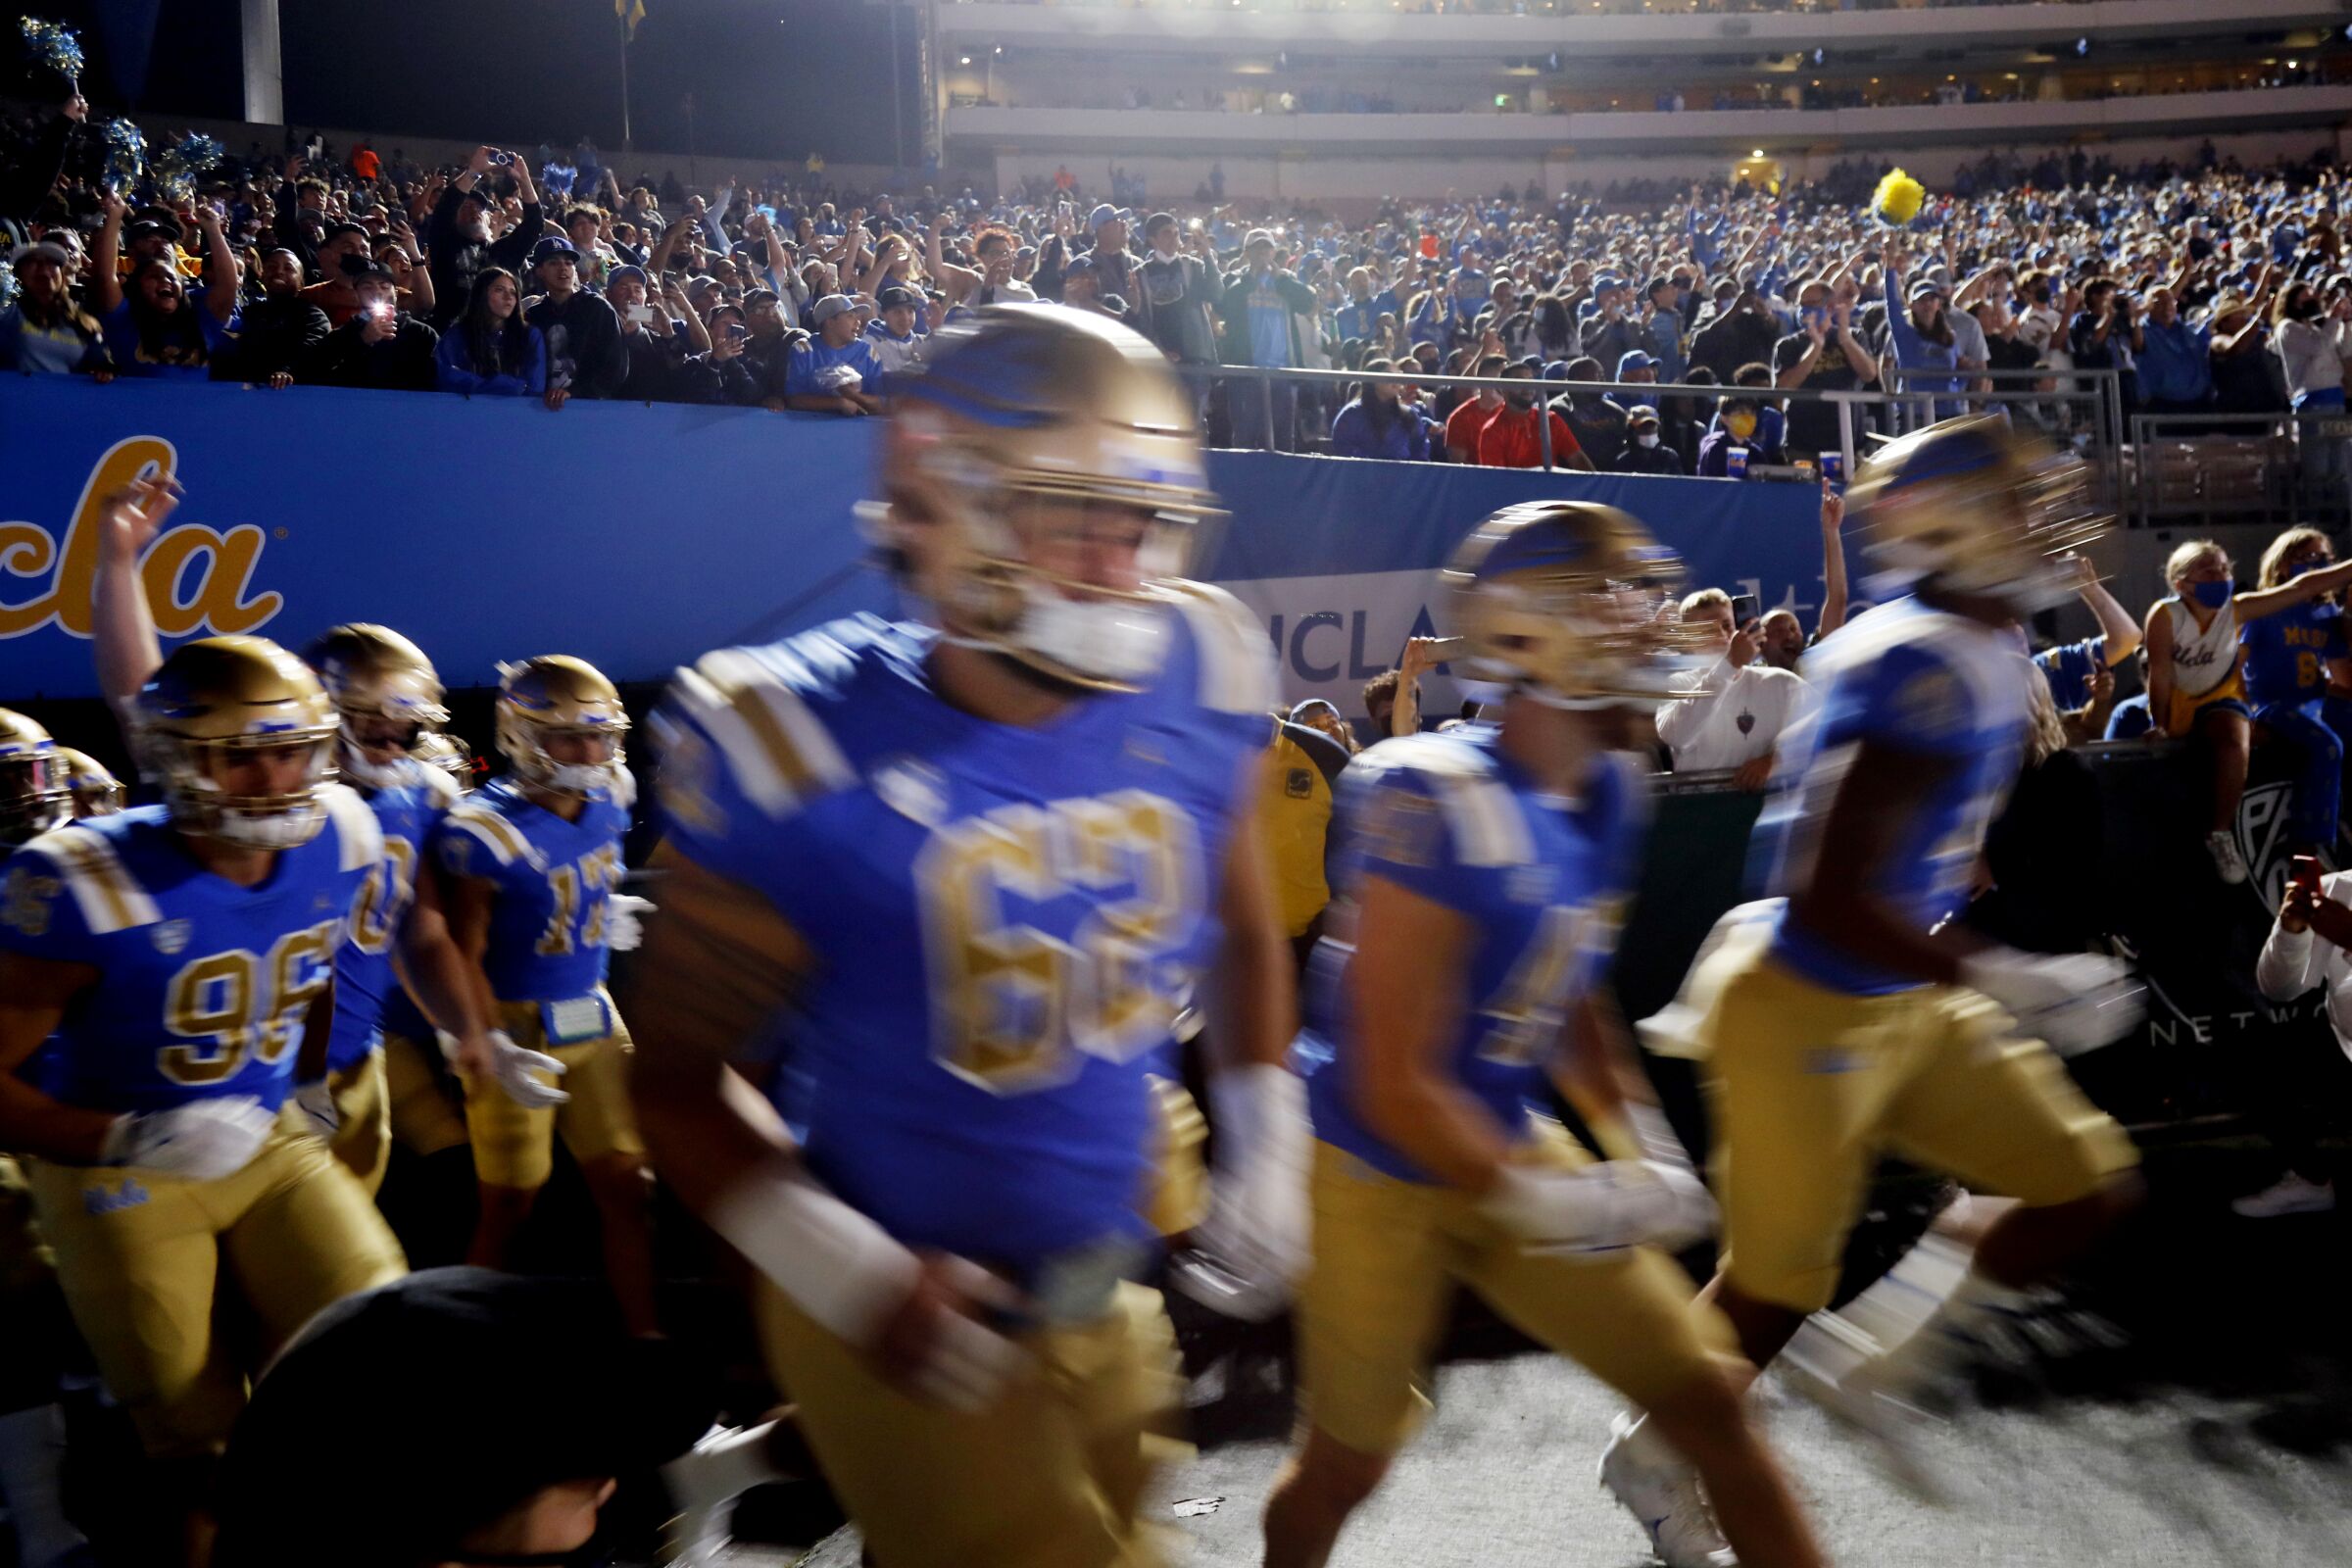 UCLA players rush onto the football field.